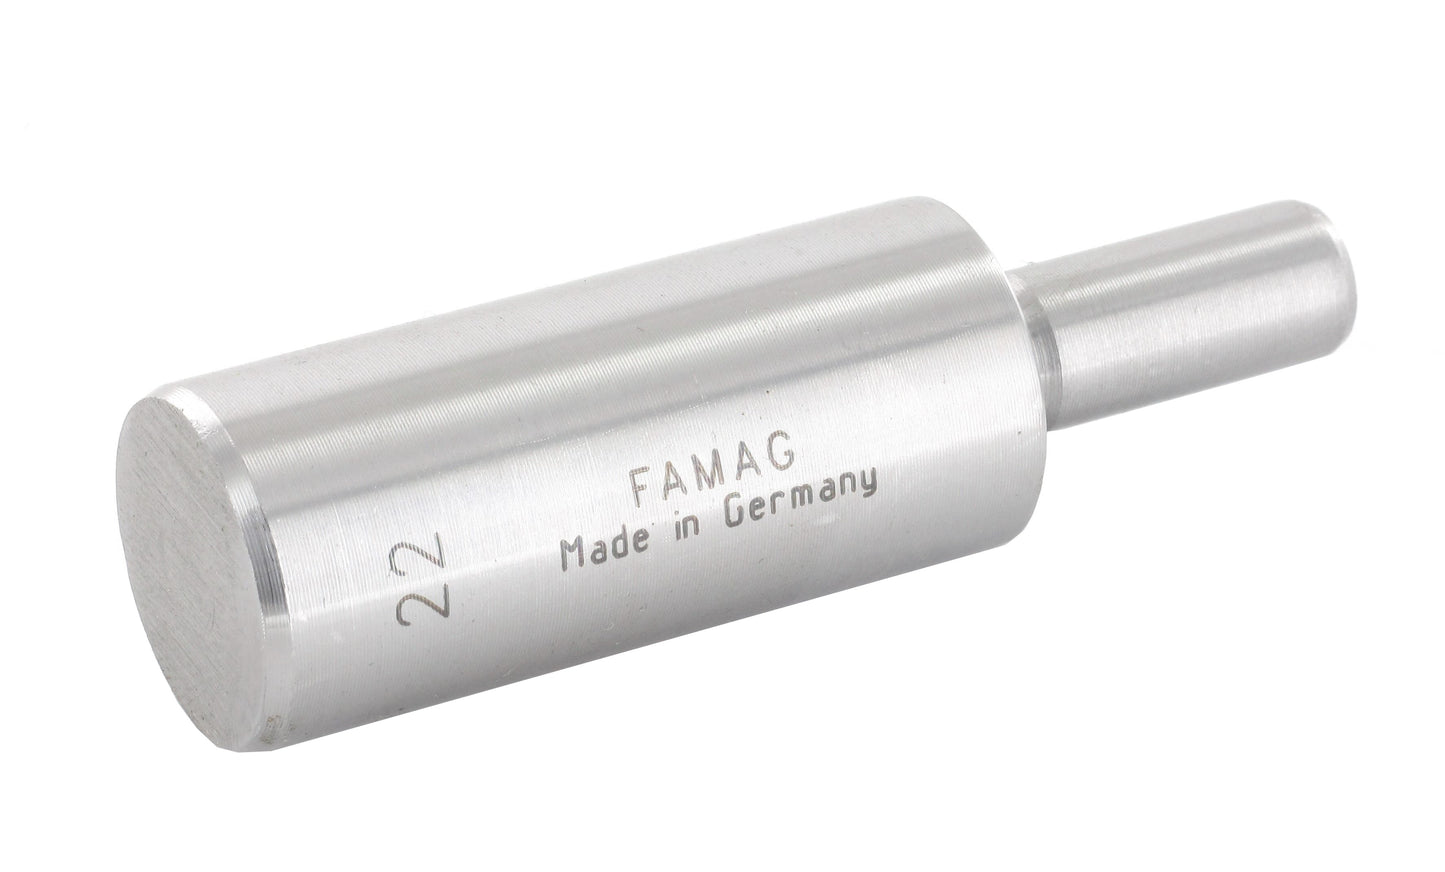 FAMAG 17 mm Guding Pin For Bormax 2.0 Prima 1614 Long Series 44.45mm - 120mm, 1619017